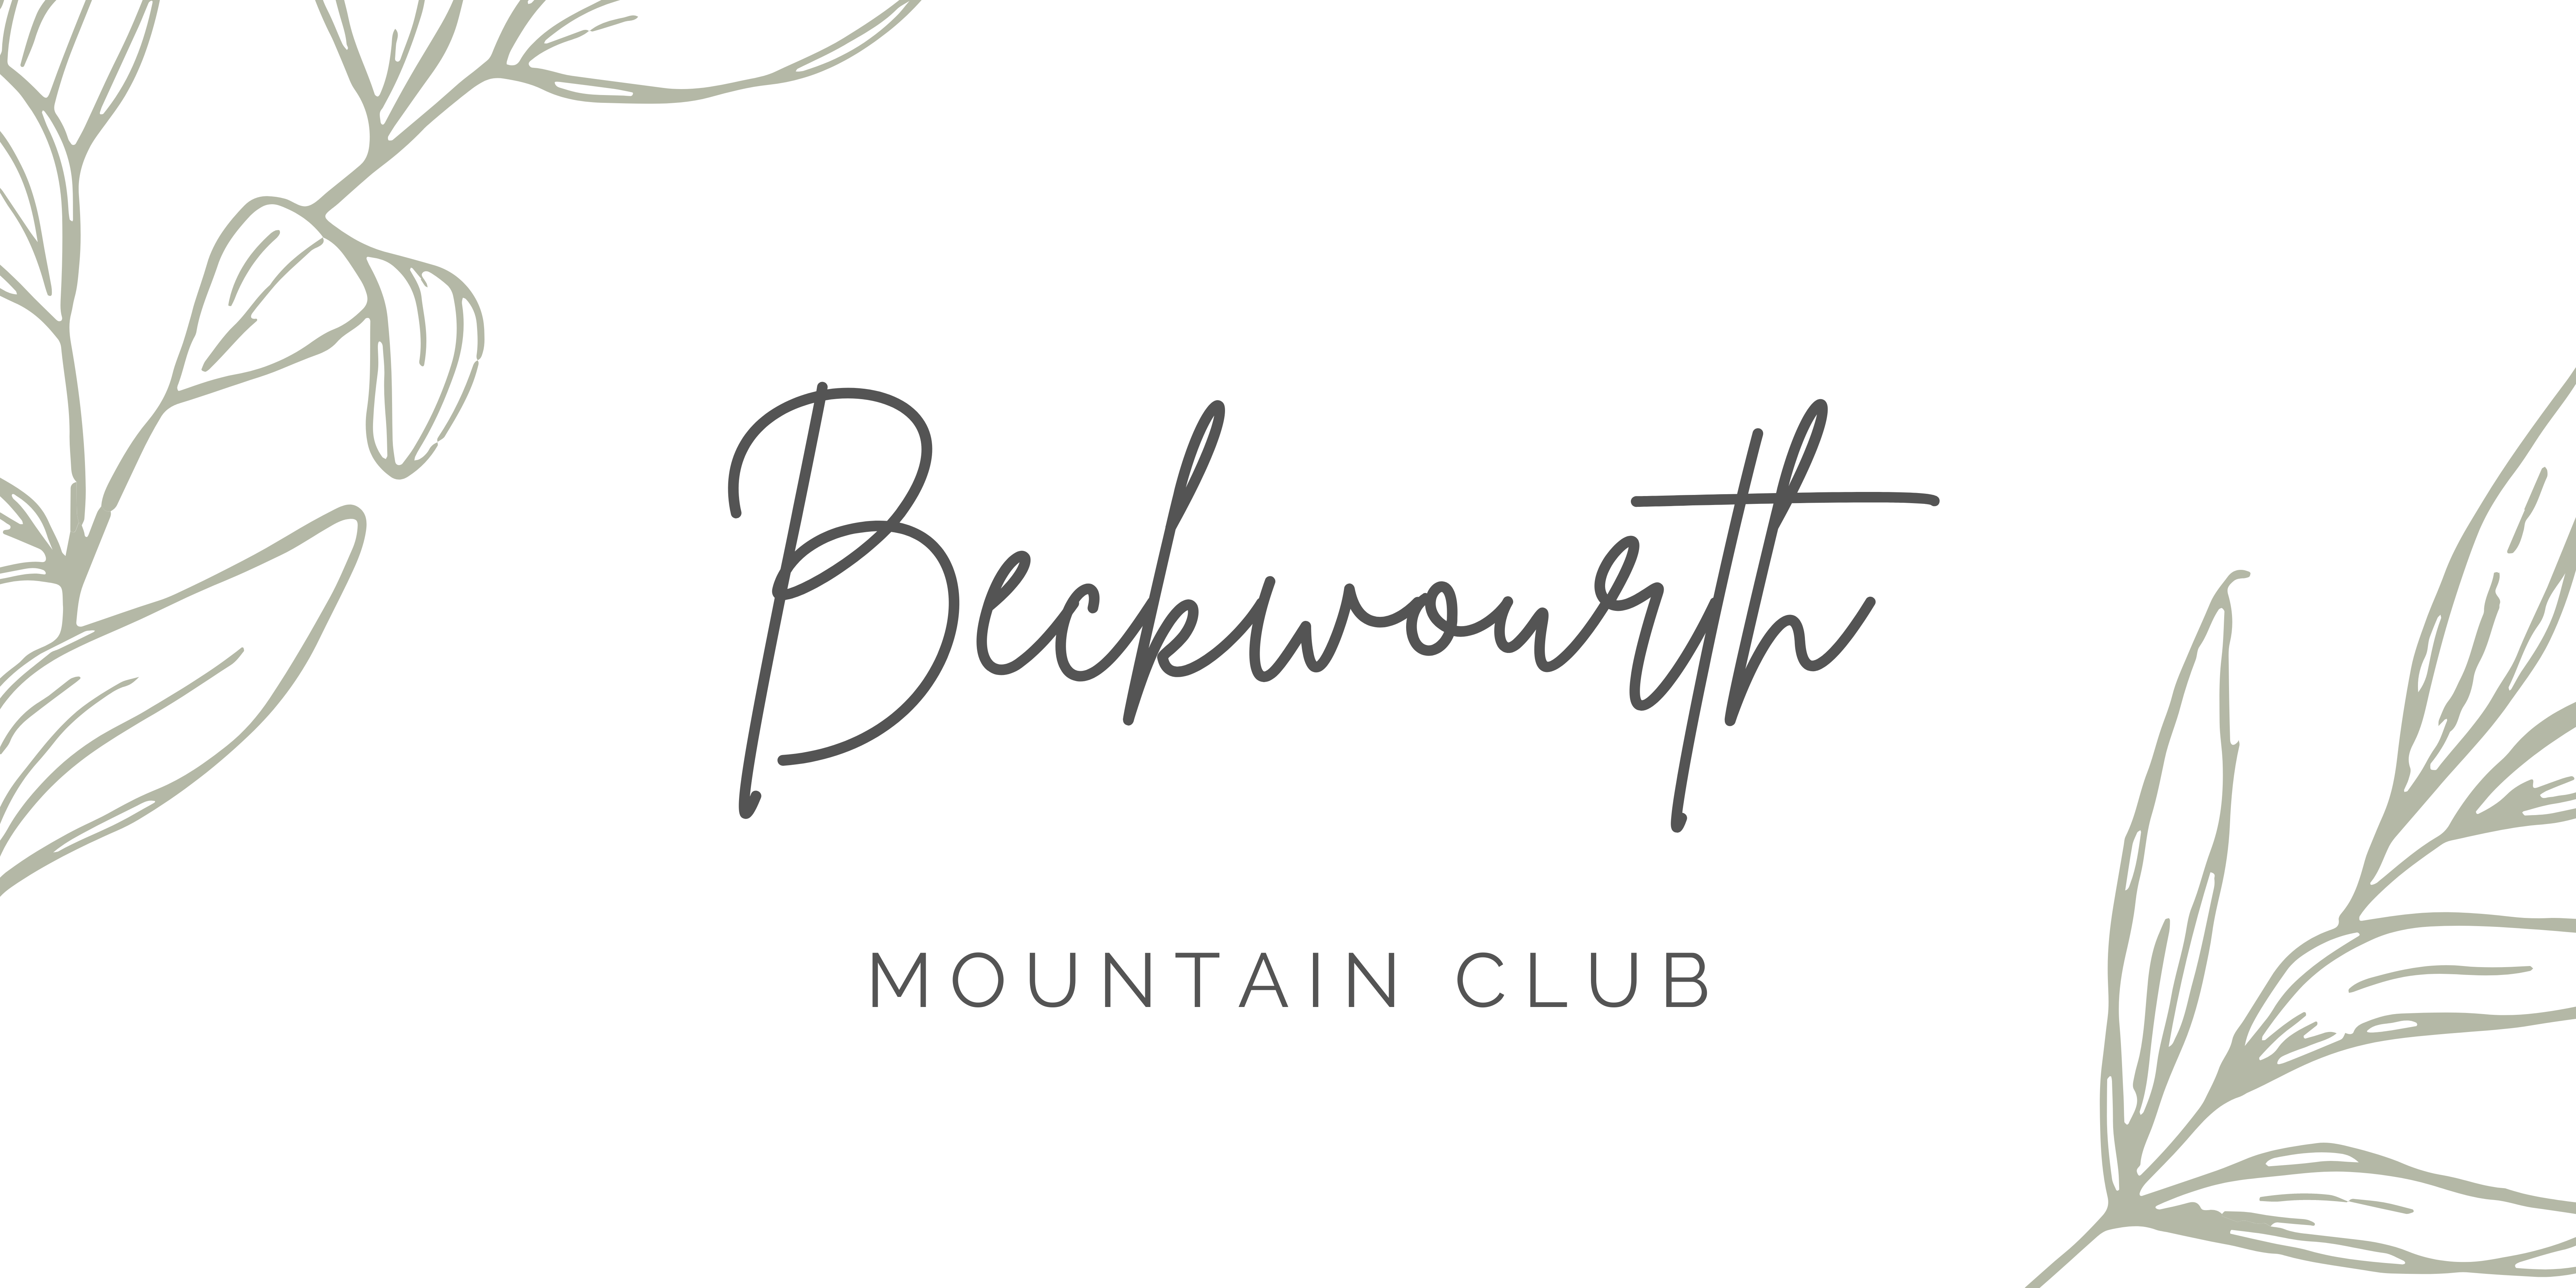 Beck Wourth Mountain Club